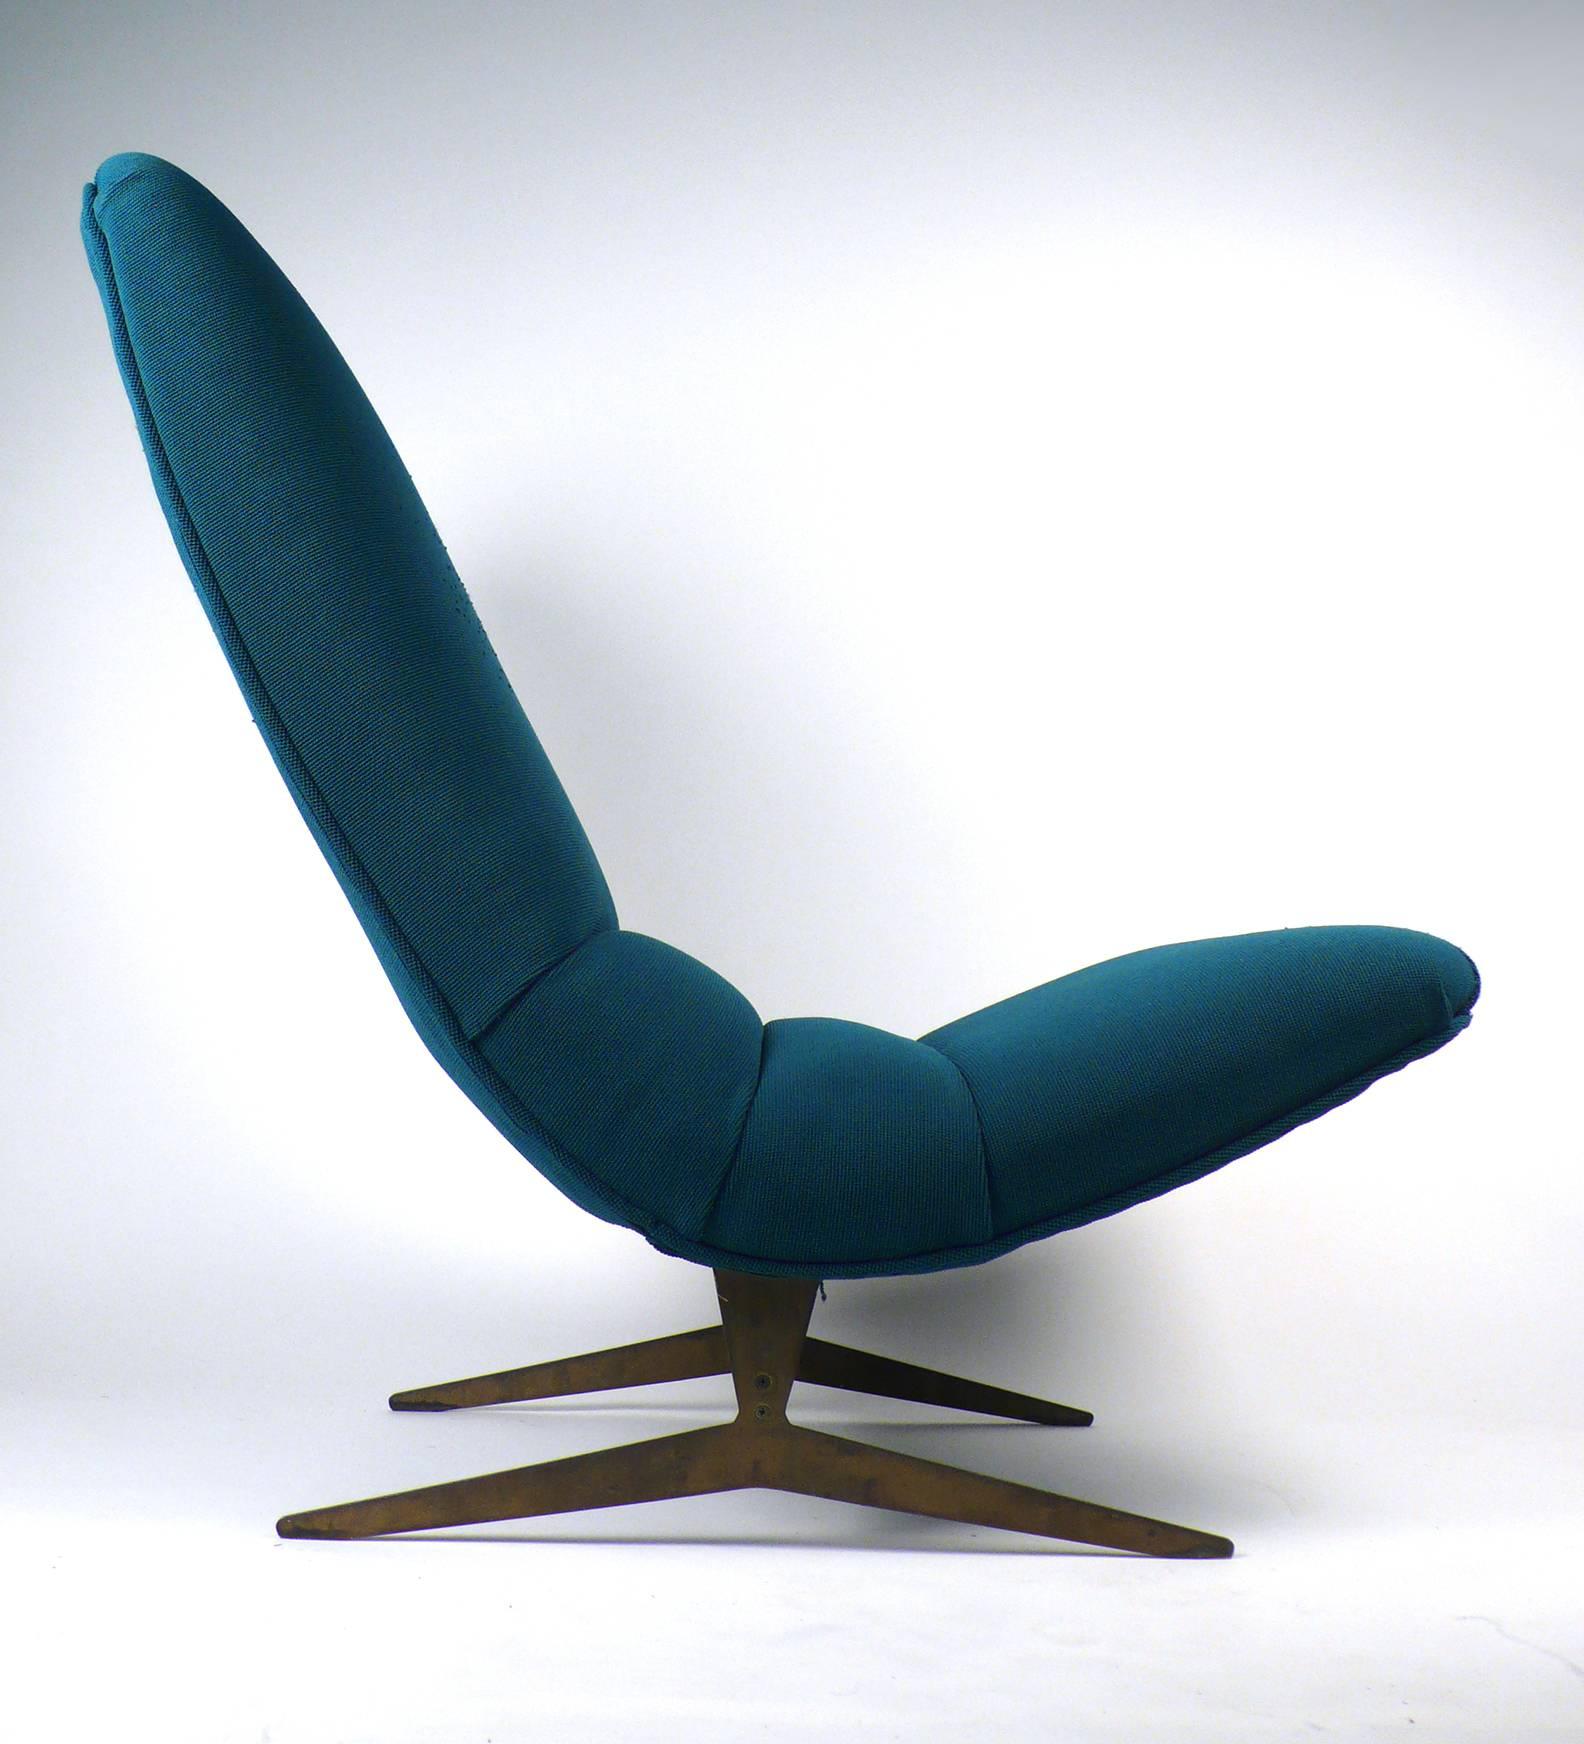 Sleek 1960s designer lounge chair with bronze base. Unmarked. Has a bit of an Osvaldo Borsani aesthetic to it.